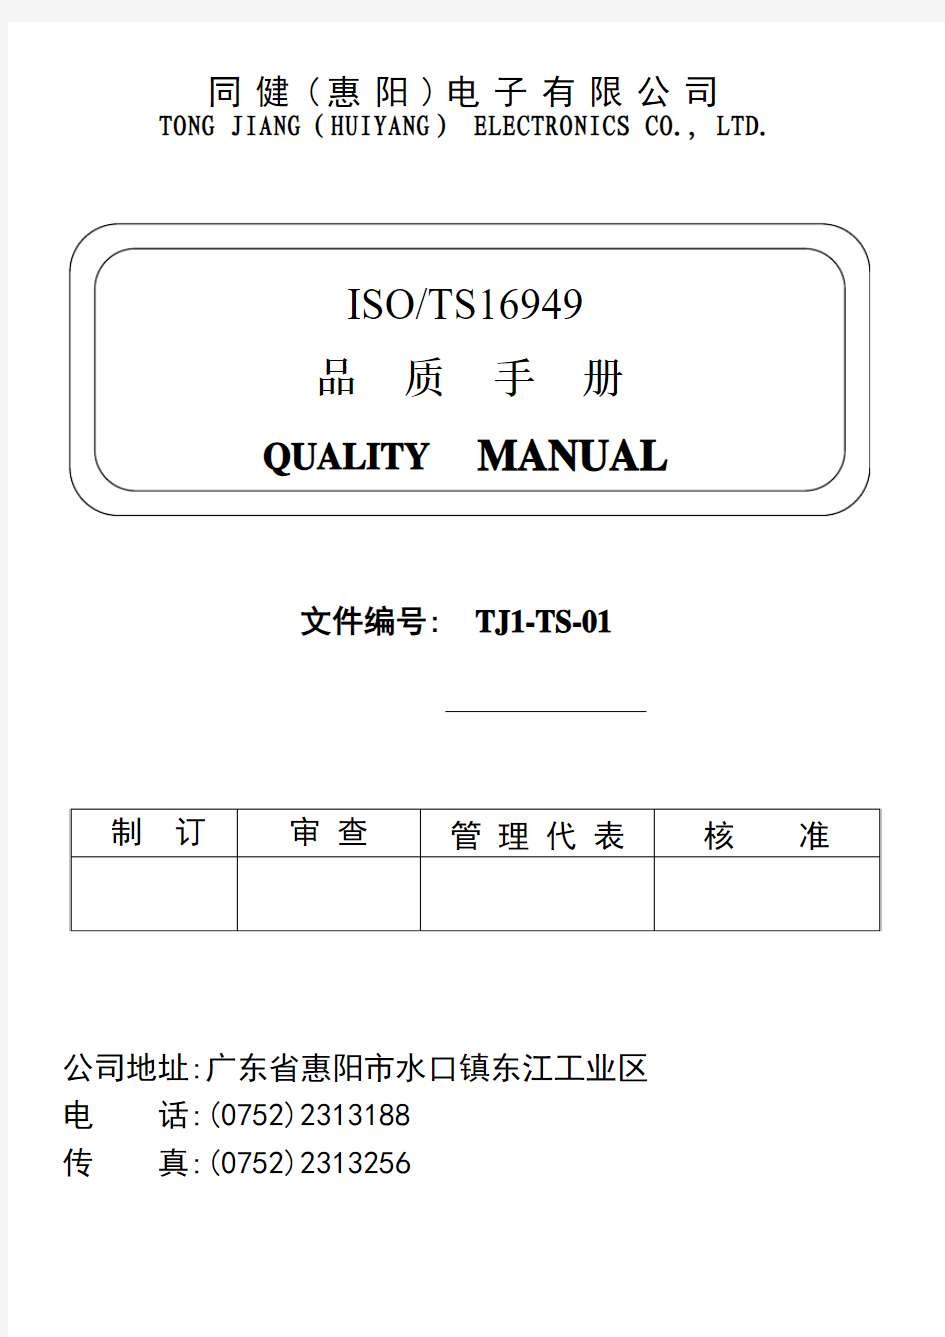 ISOTS16949品质手册